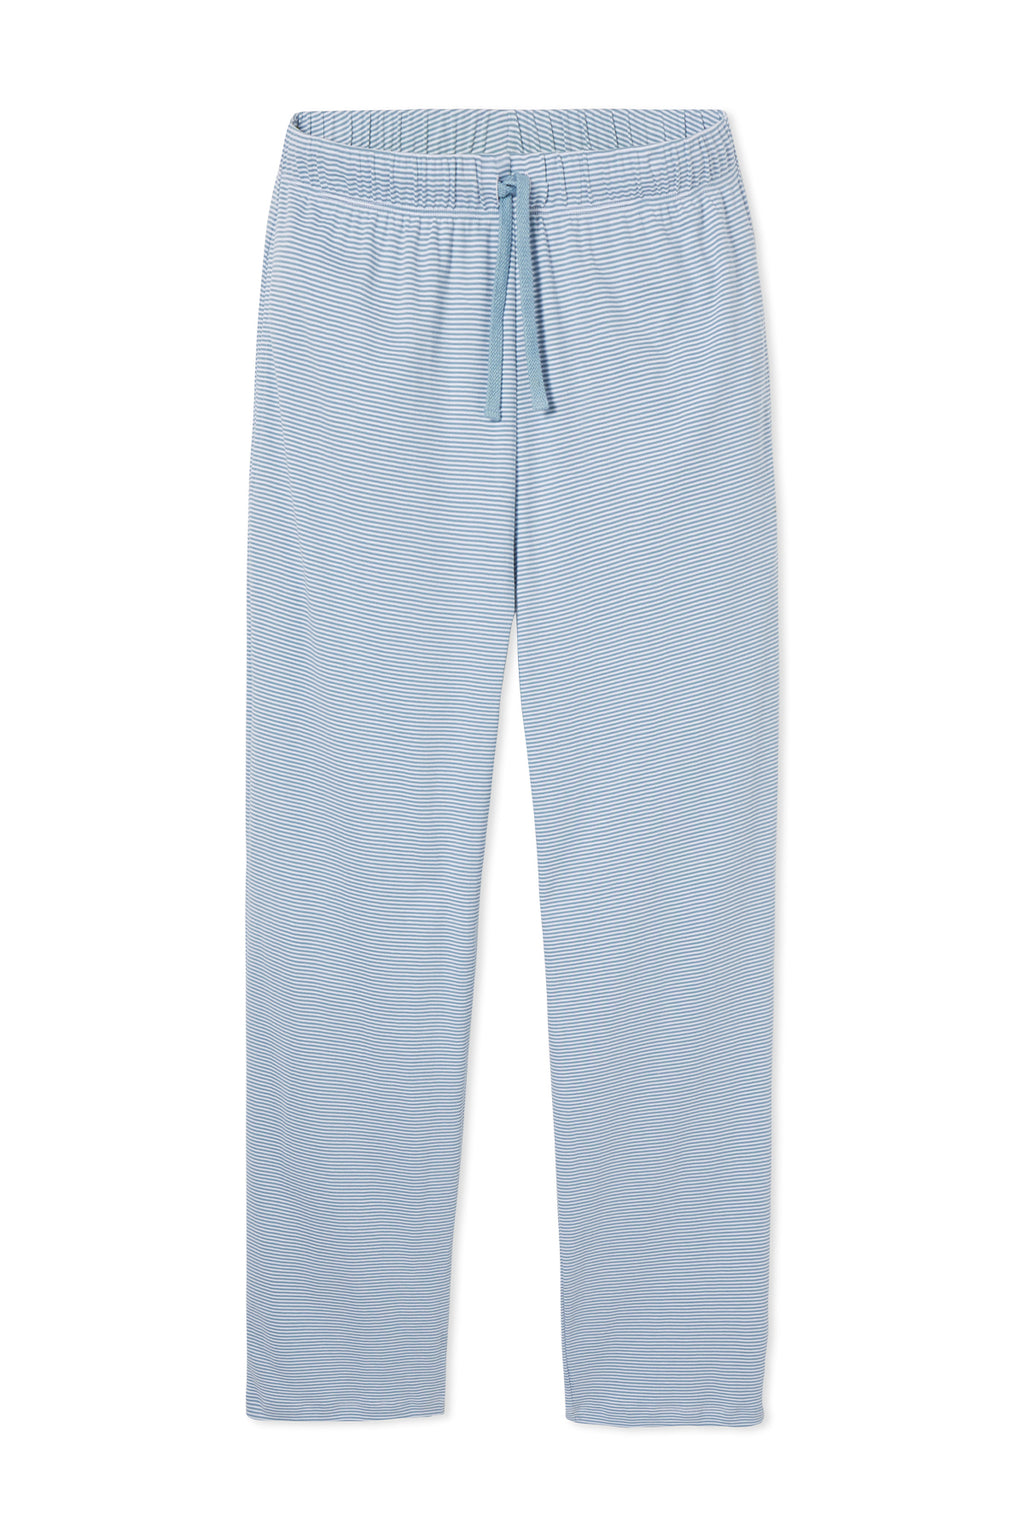 NEW, Short Men's Jogger Sleep Pant , 100% Cotton Jersey Knit Pajama Bo –  ForTheFit.com